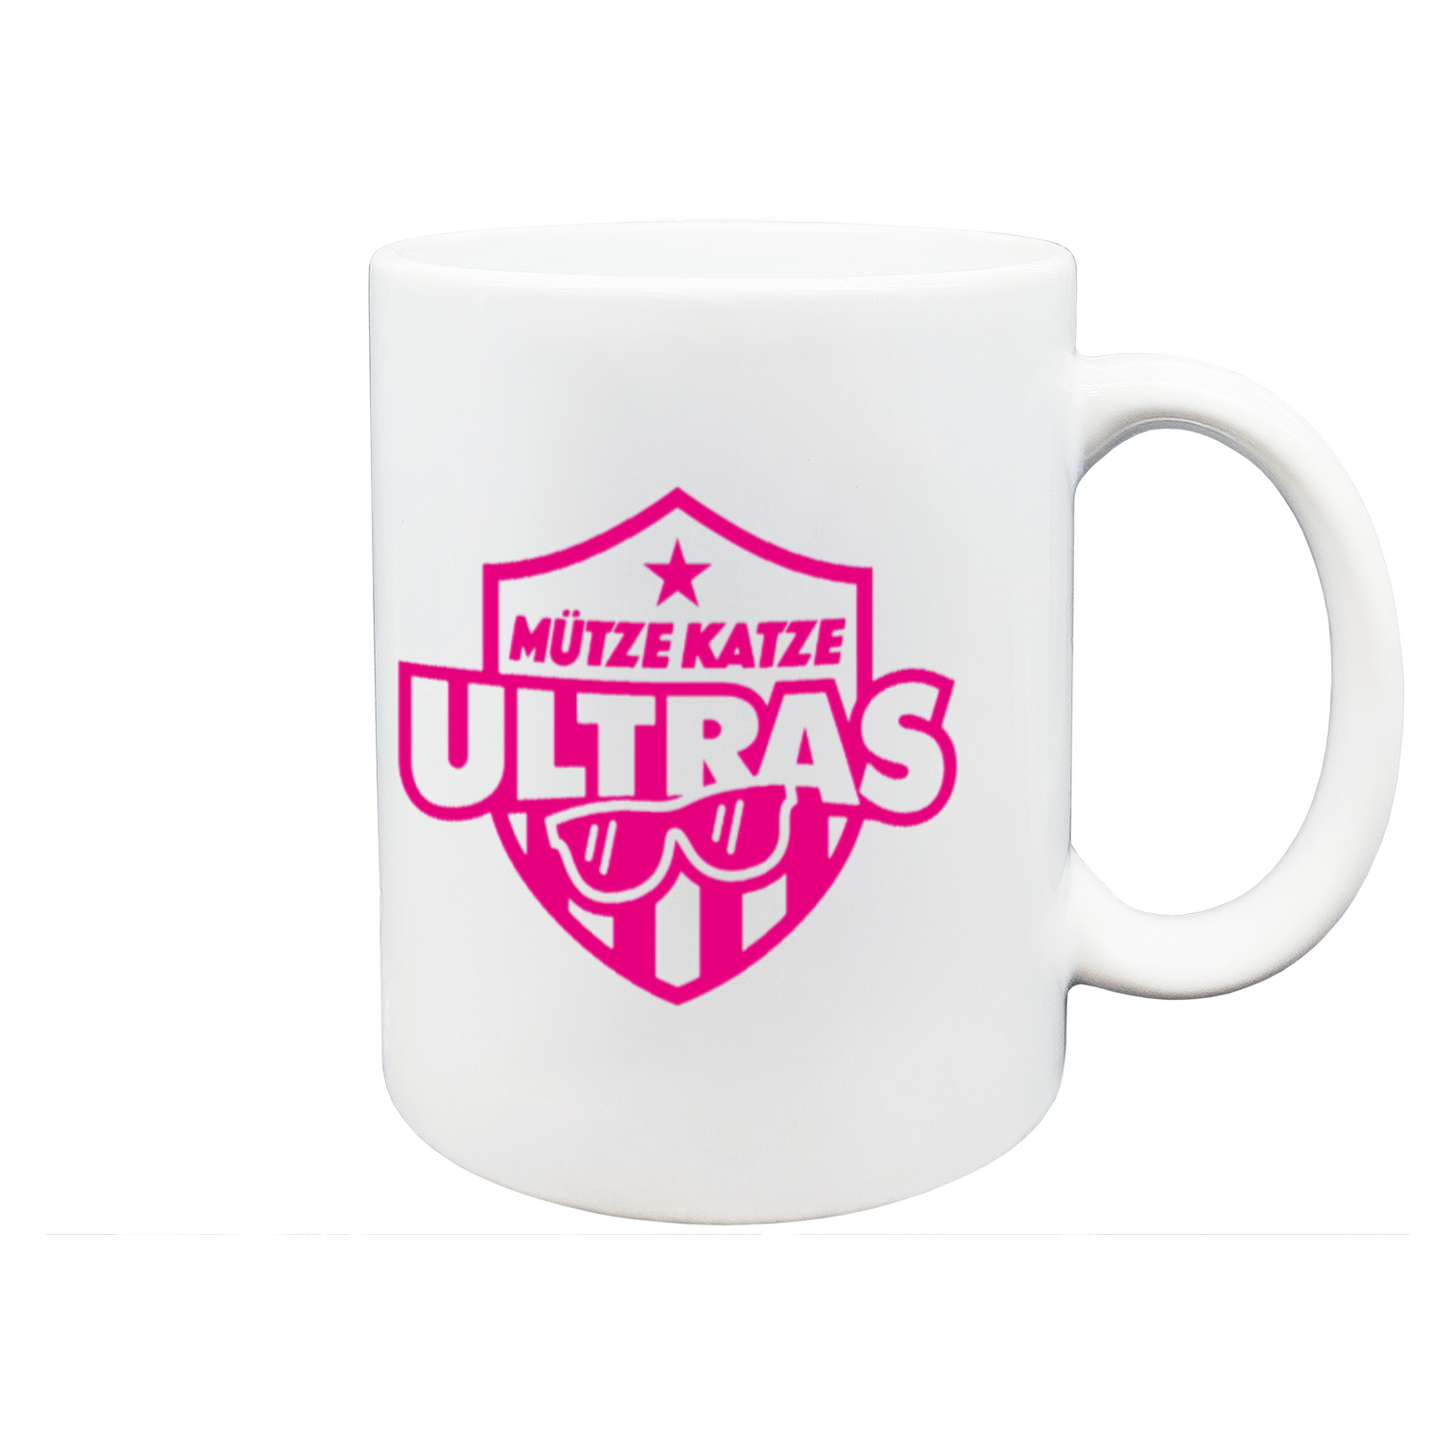 Mütze Katze Ultras - Tasse Weiss